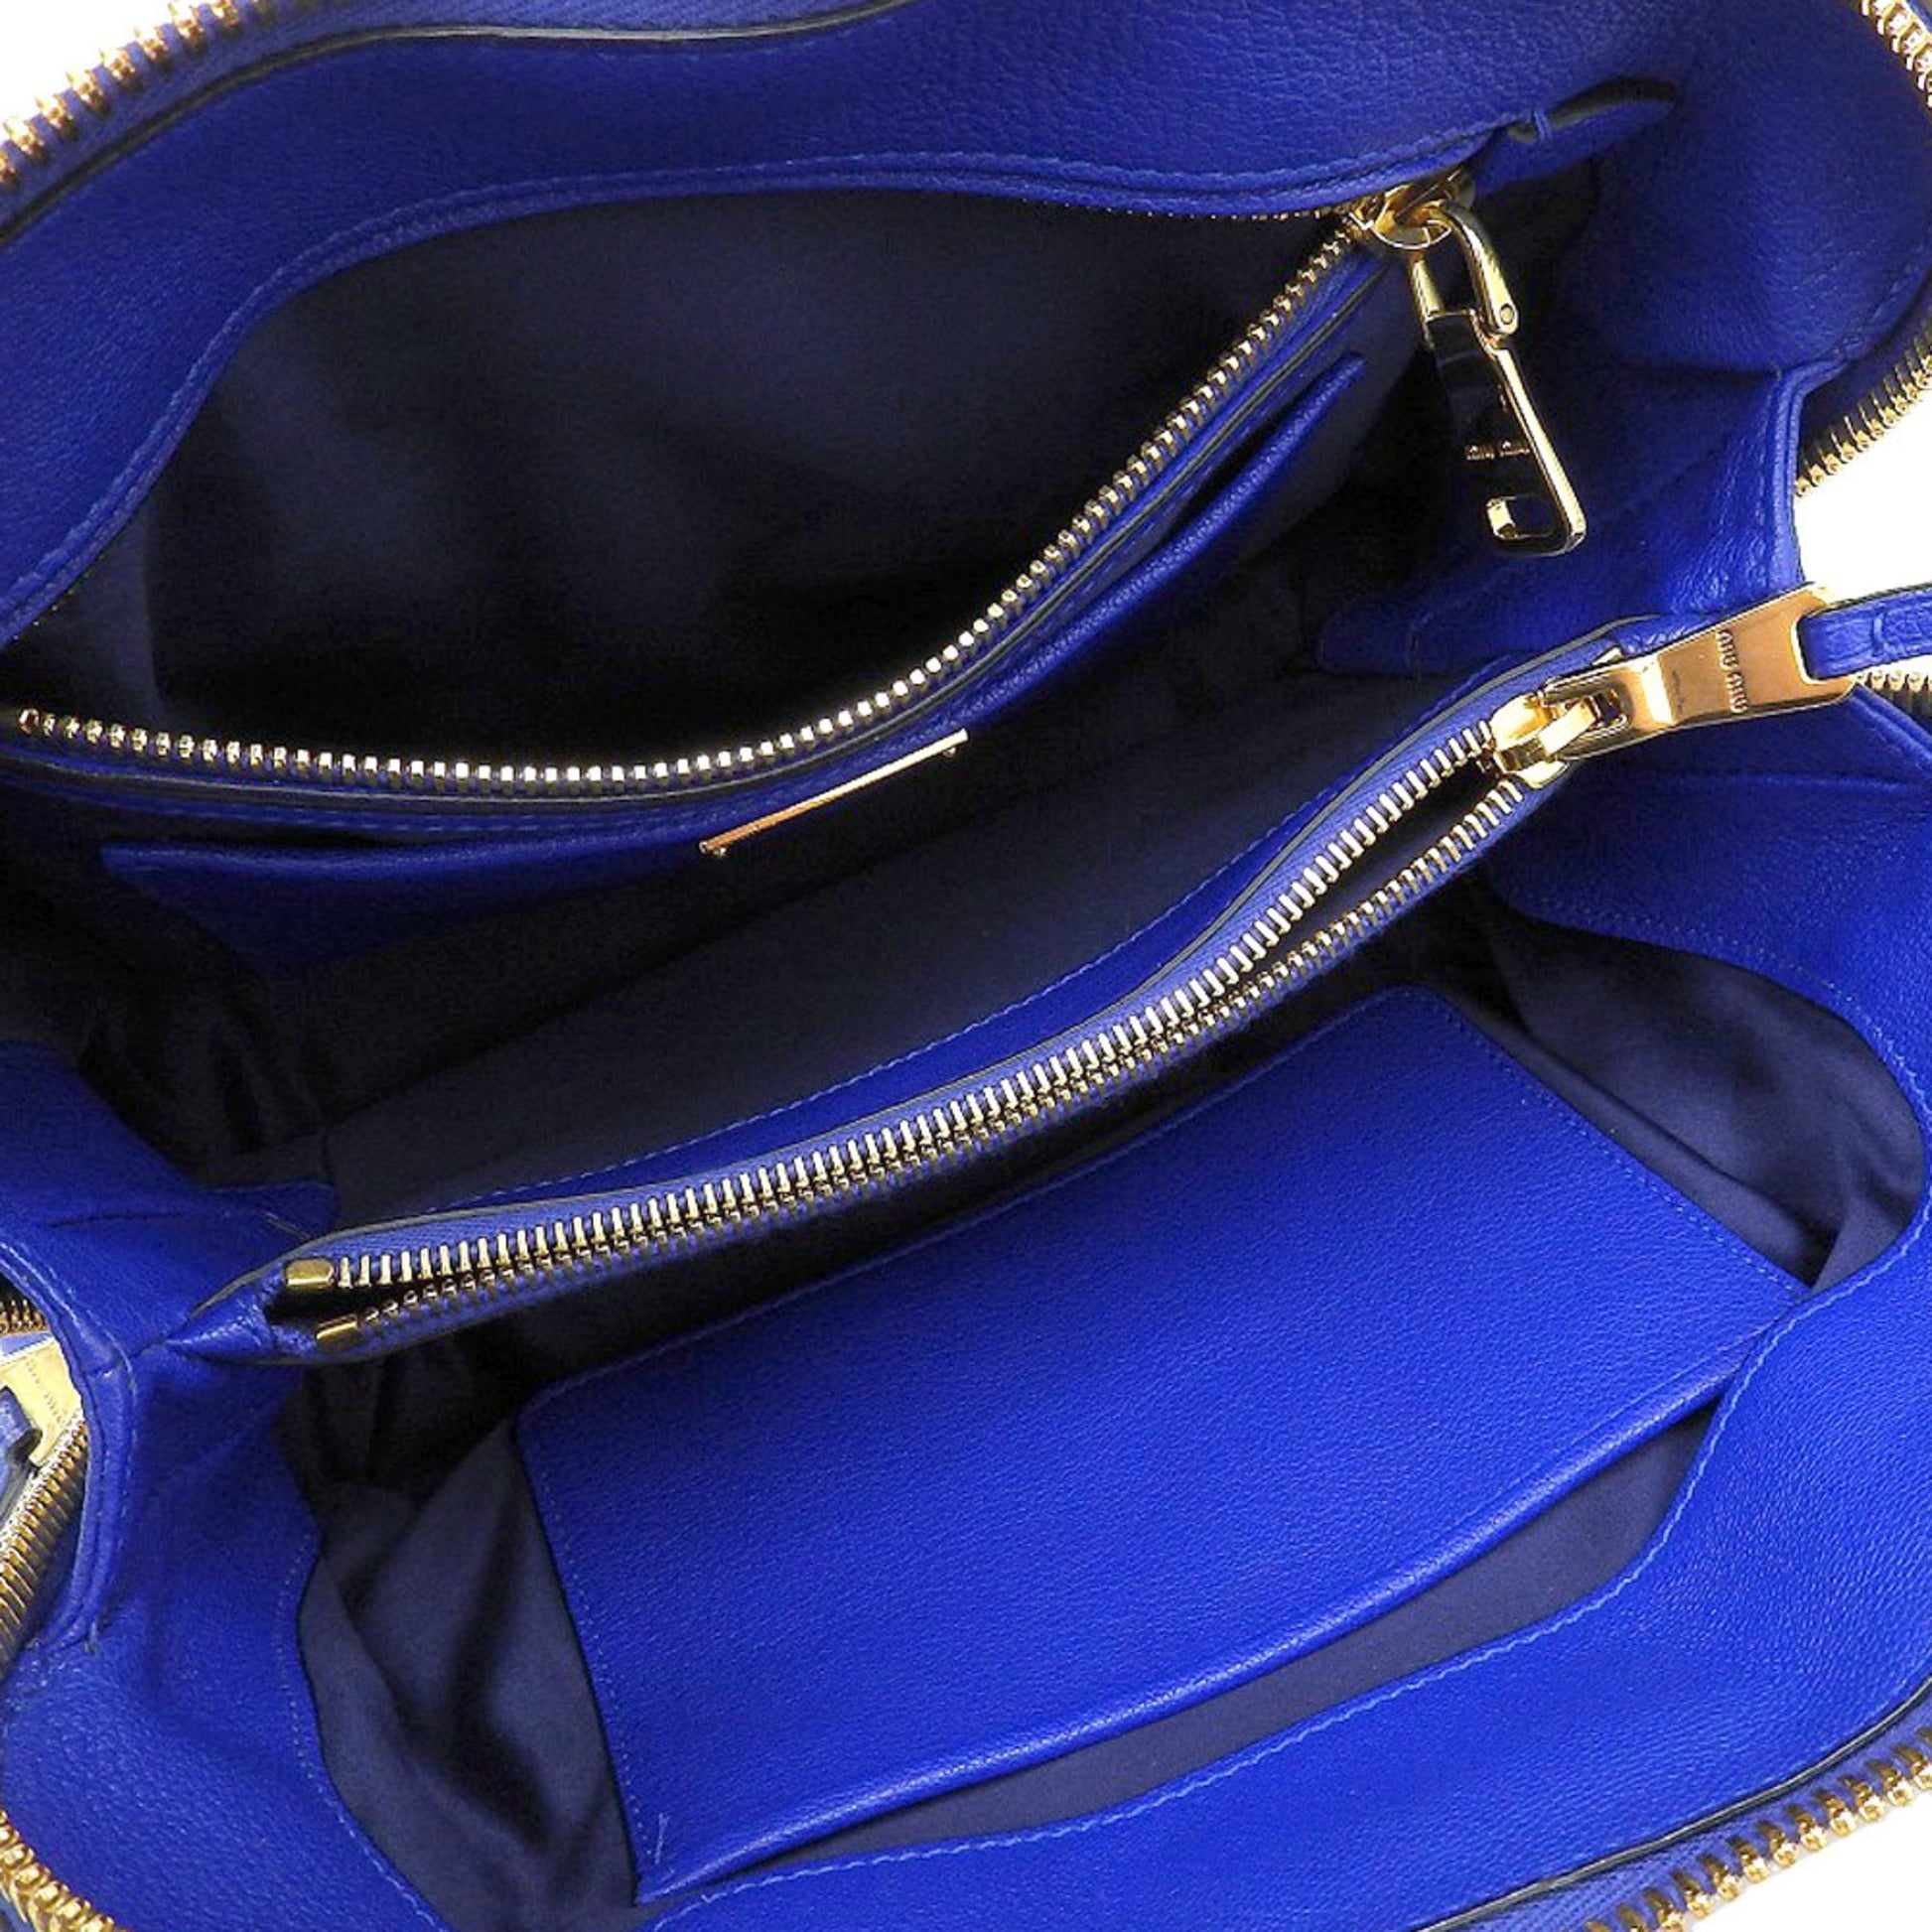 Miu MIUMIU Madras handbag 2WAY bag leather blue RL0097